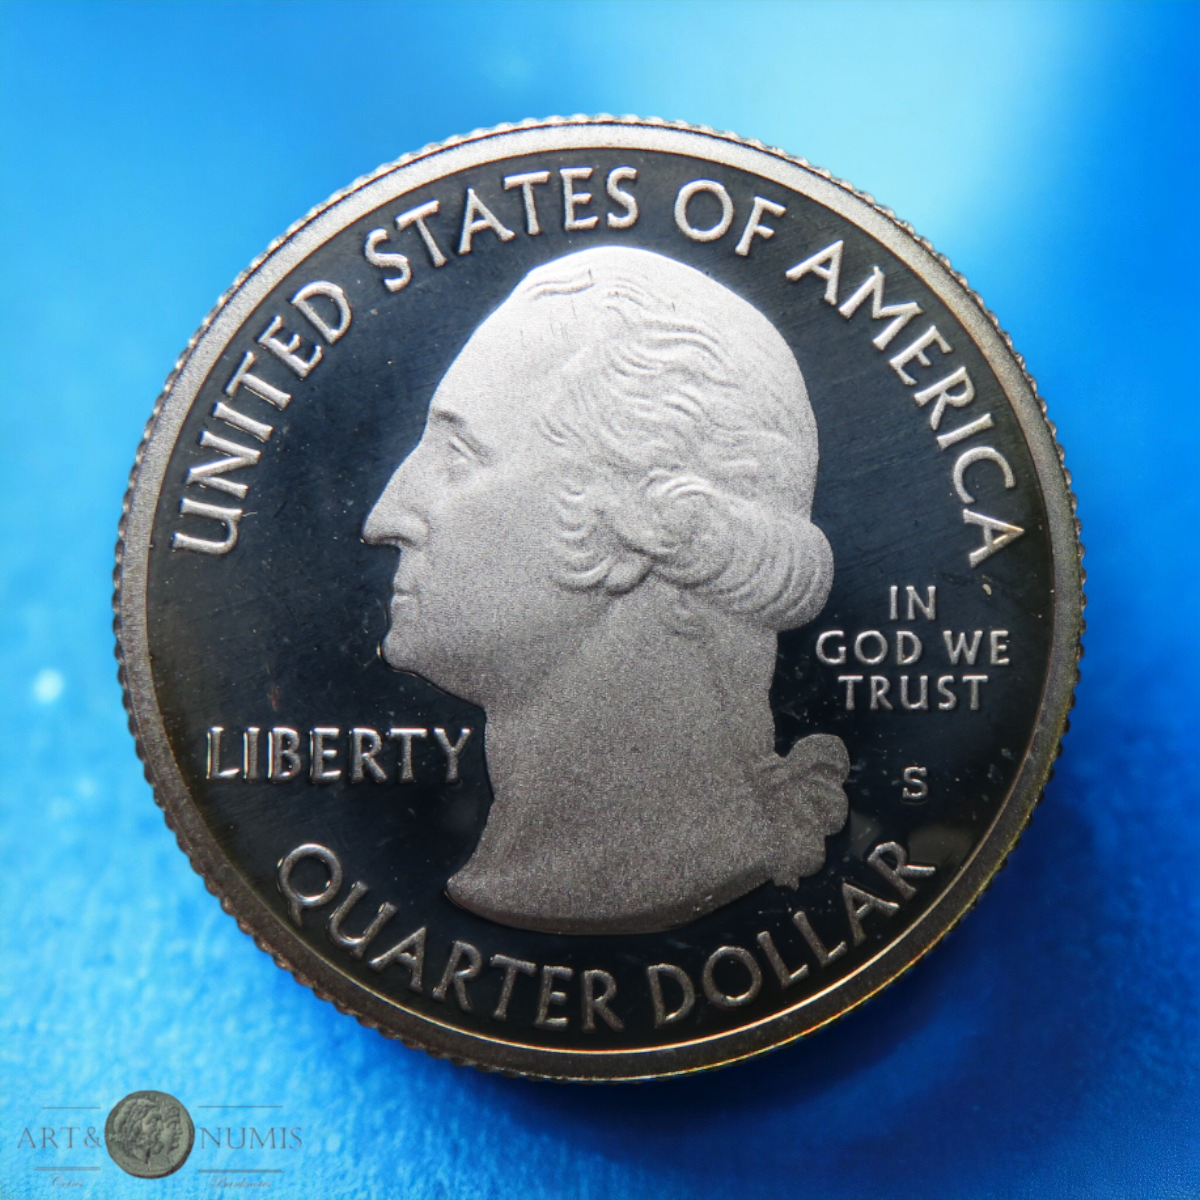 USA - Silver Quarter dollar Proof Blue Ridge Parkway 2015